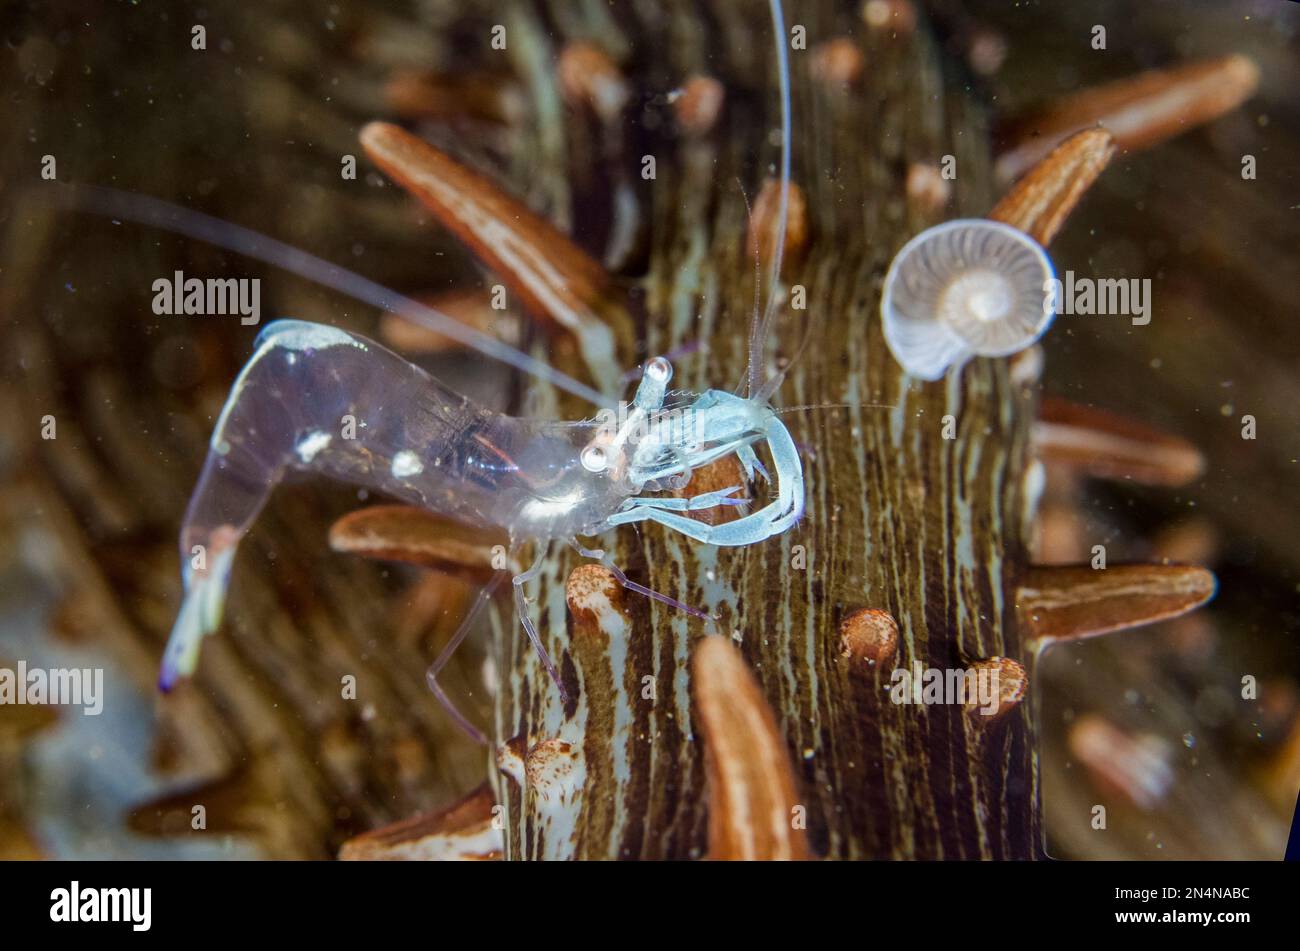 Magnificent Anemone Shrimp, Ancylomenes magnificus, on Haeckeli Anemone, Actinostephanus haeckeli, with Foraminifera shell, Foraminifera Subphylum, Me Stock Photo